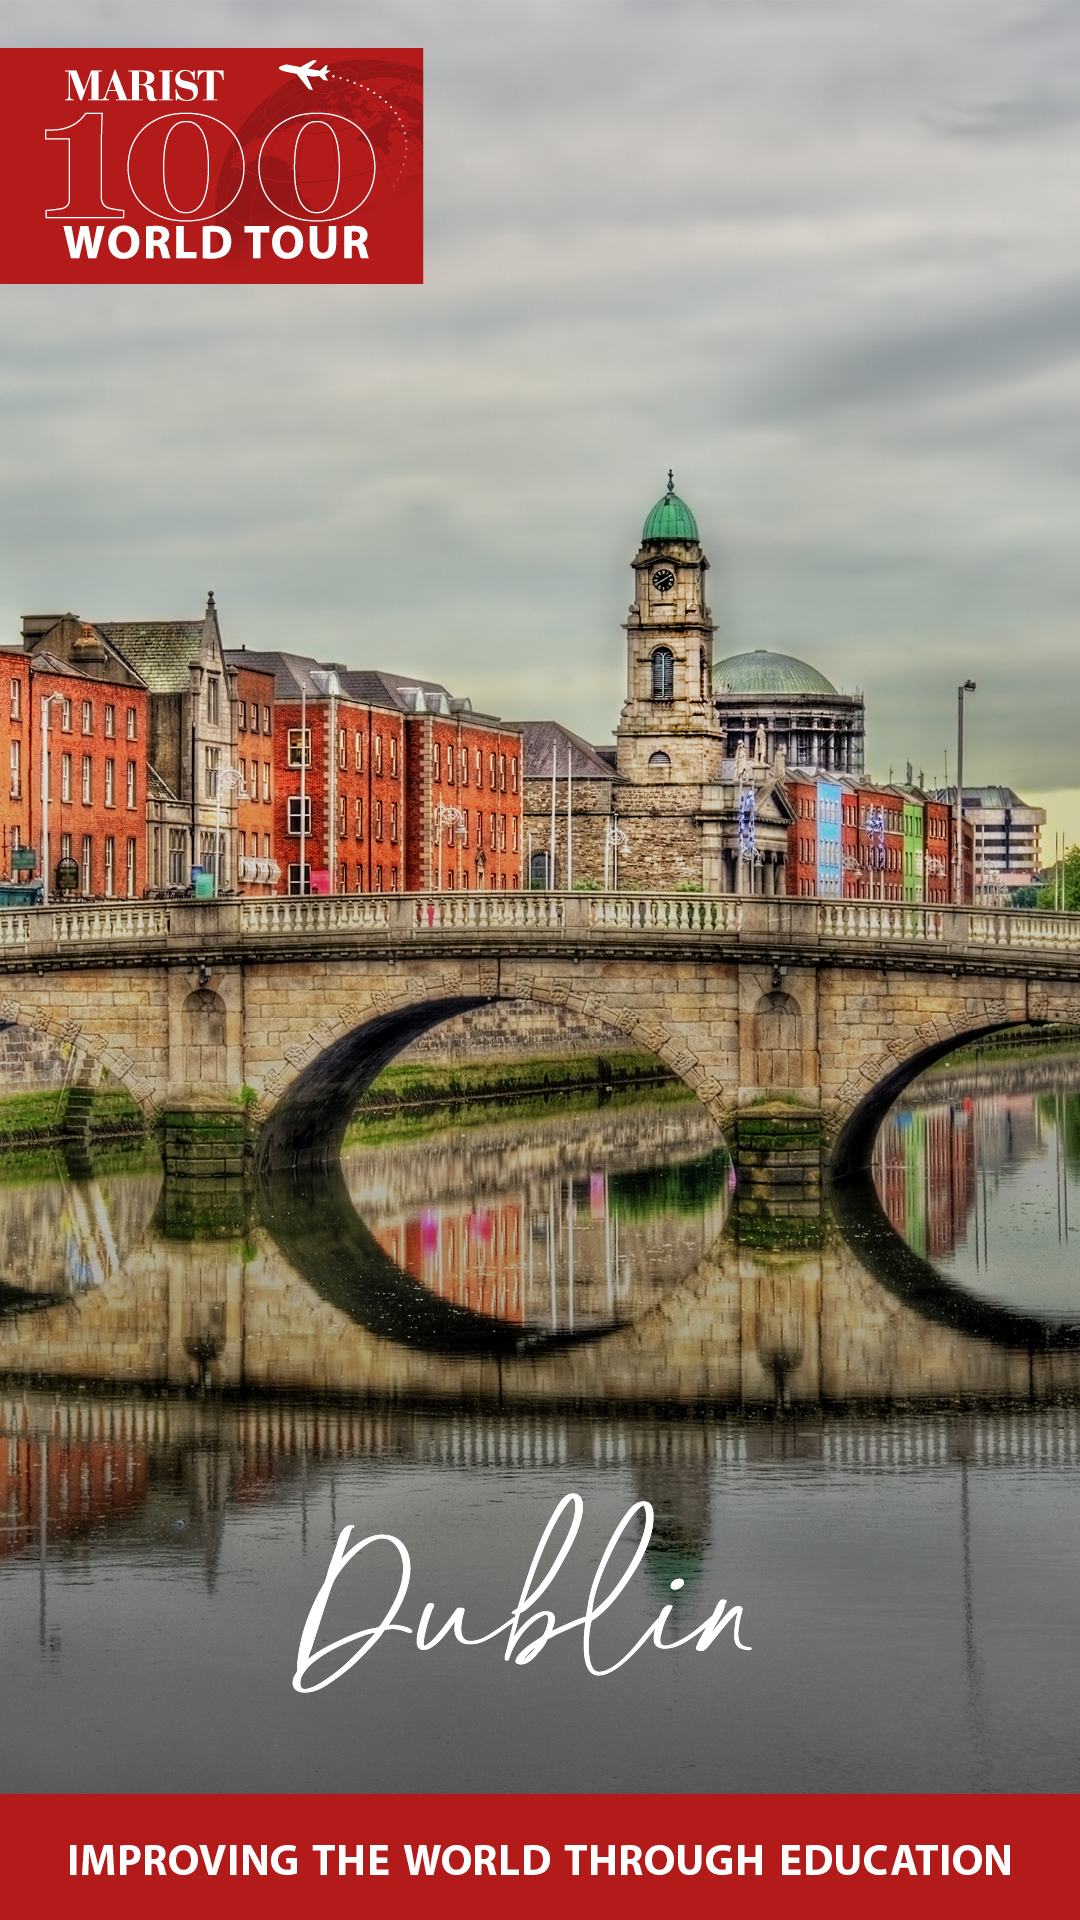 Image of Dublin, Ireland.